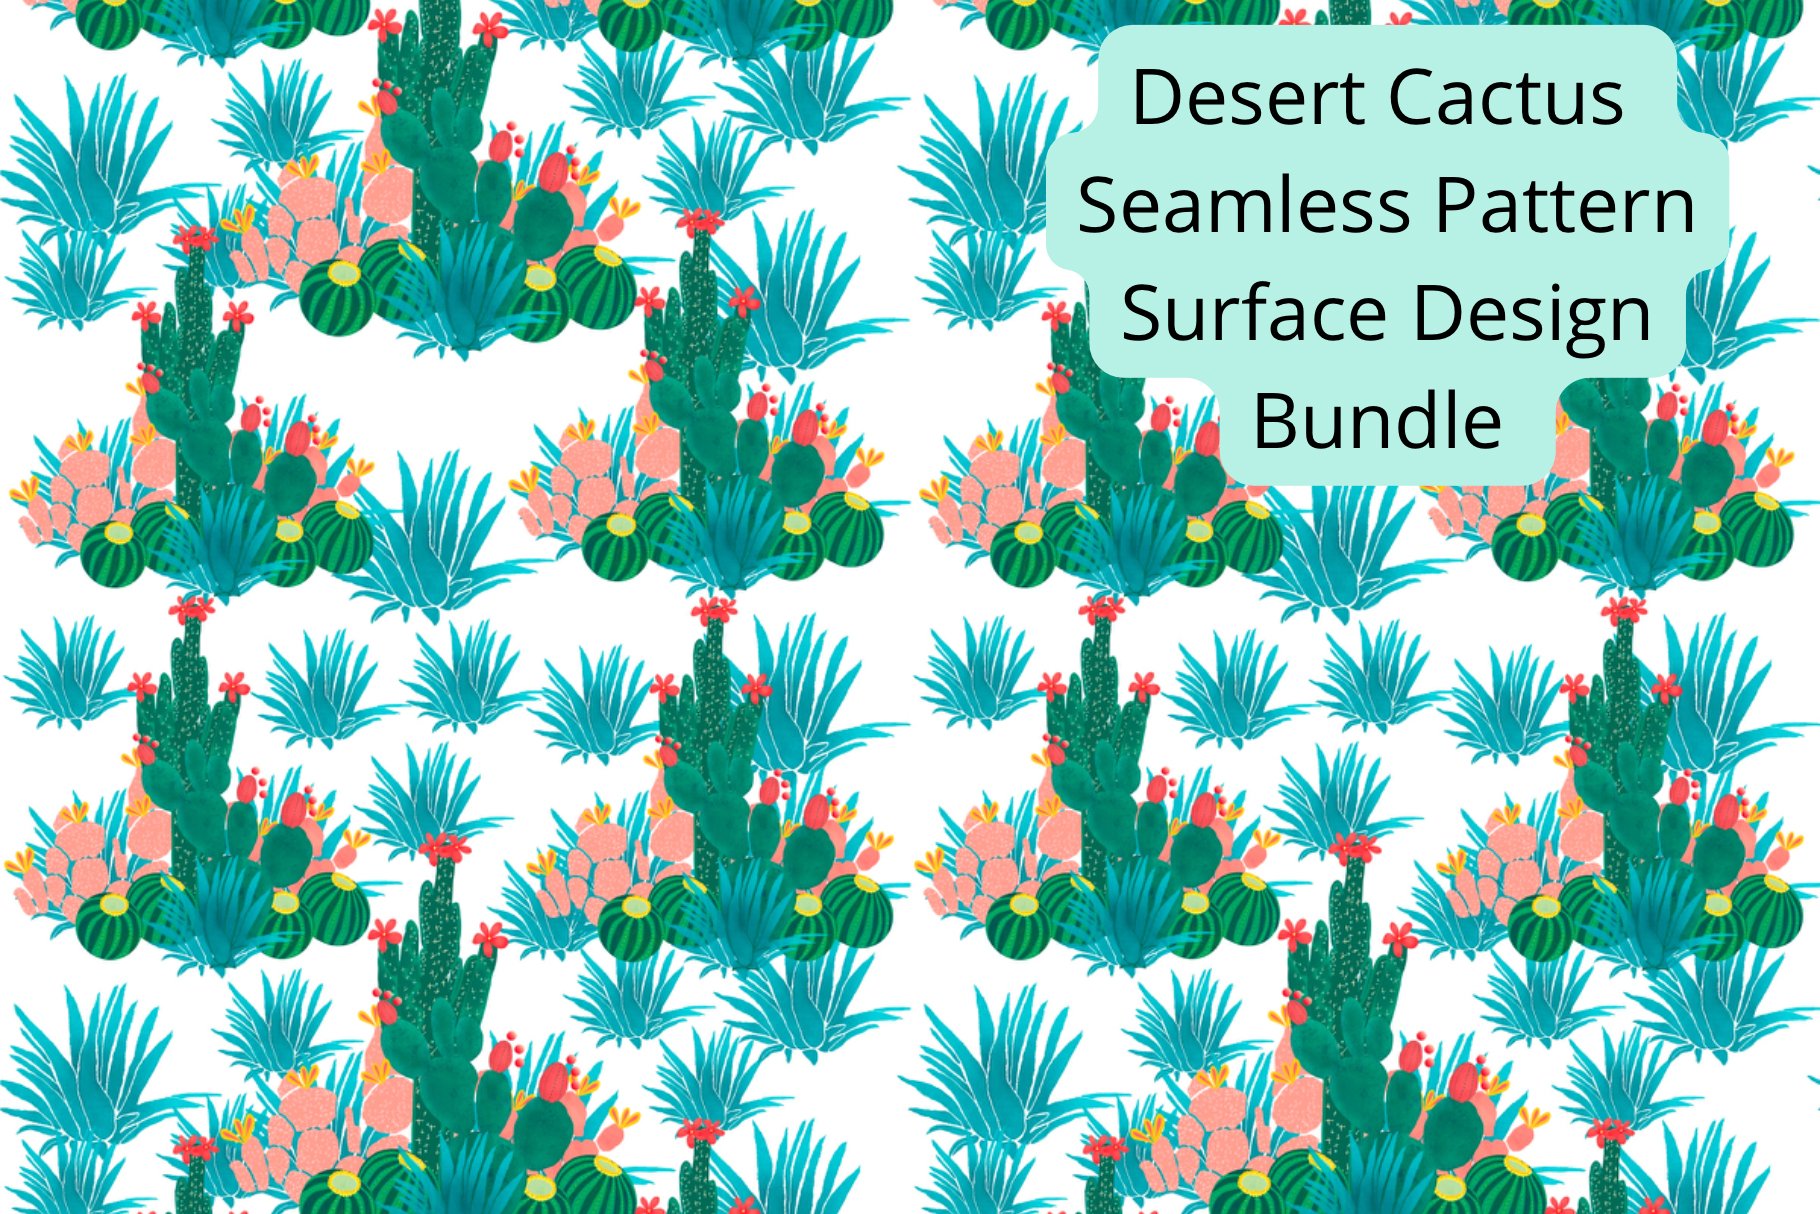 Desert Cactus Seamless Pattern cover image.